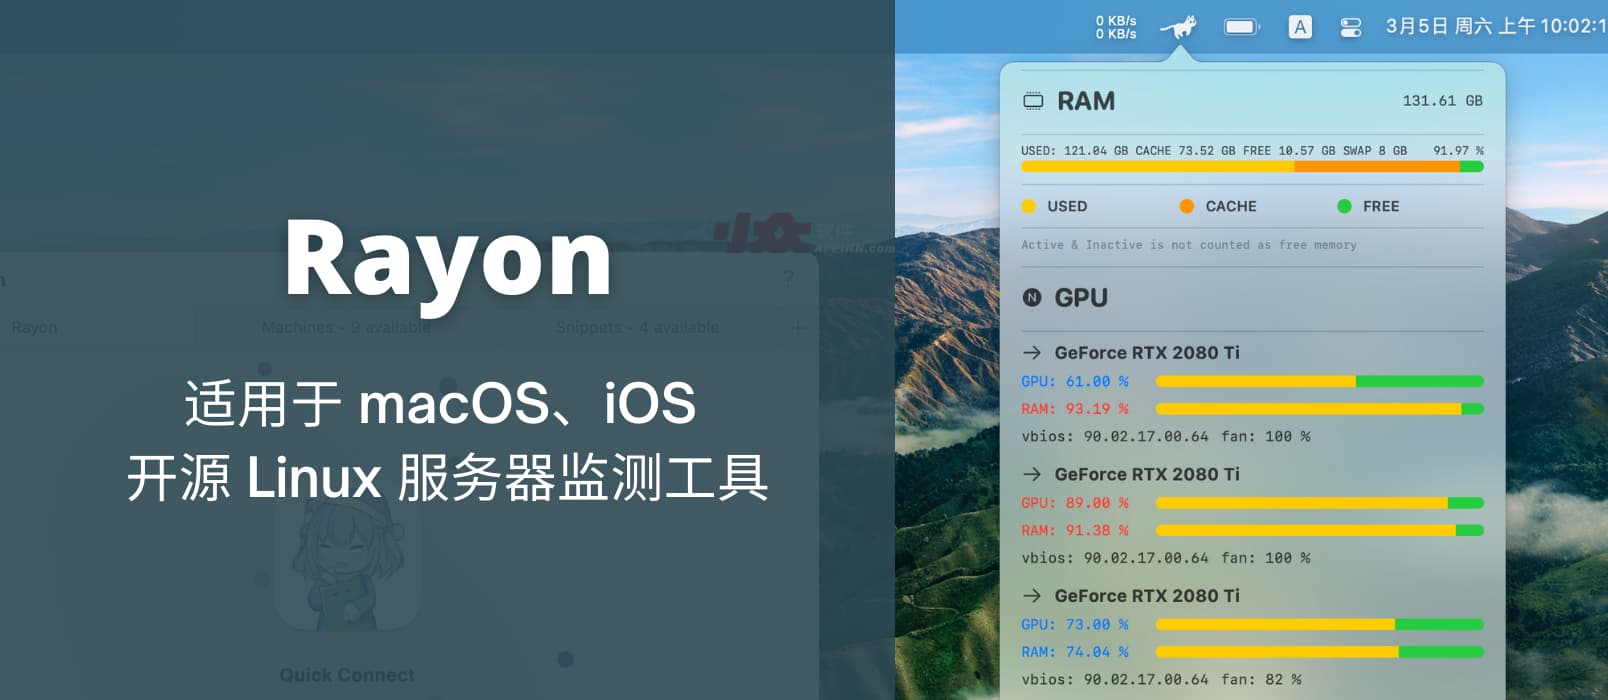 Rayon - 适用于 macOS、iOS 系统的开源 Linux 服务器监控工具